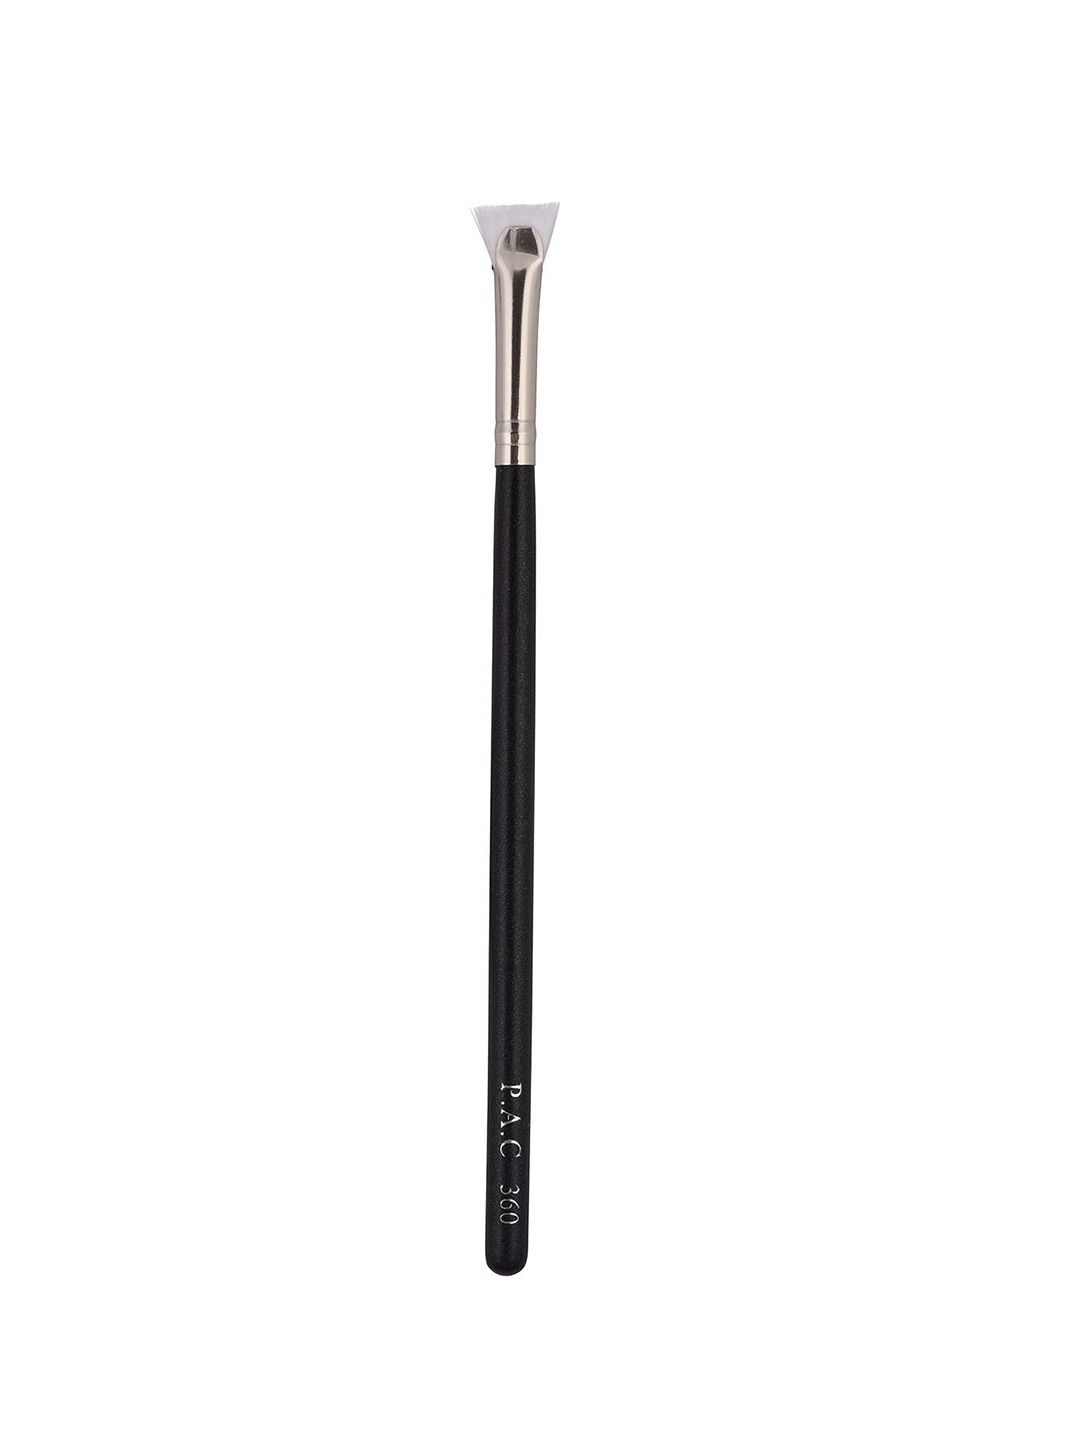 PAC Black Eyebrow Brush - 360 Price in India